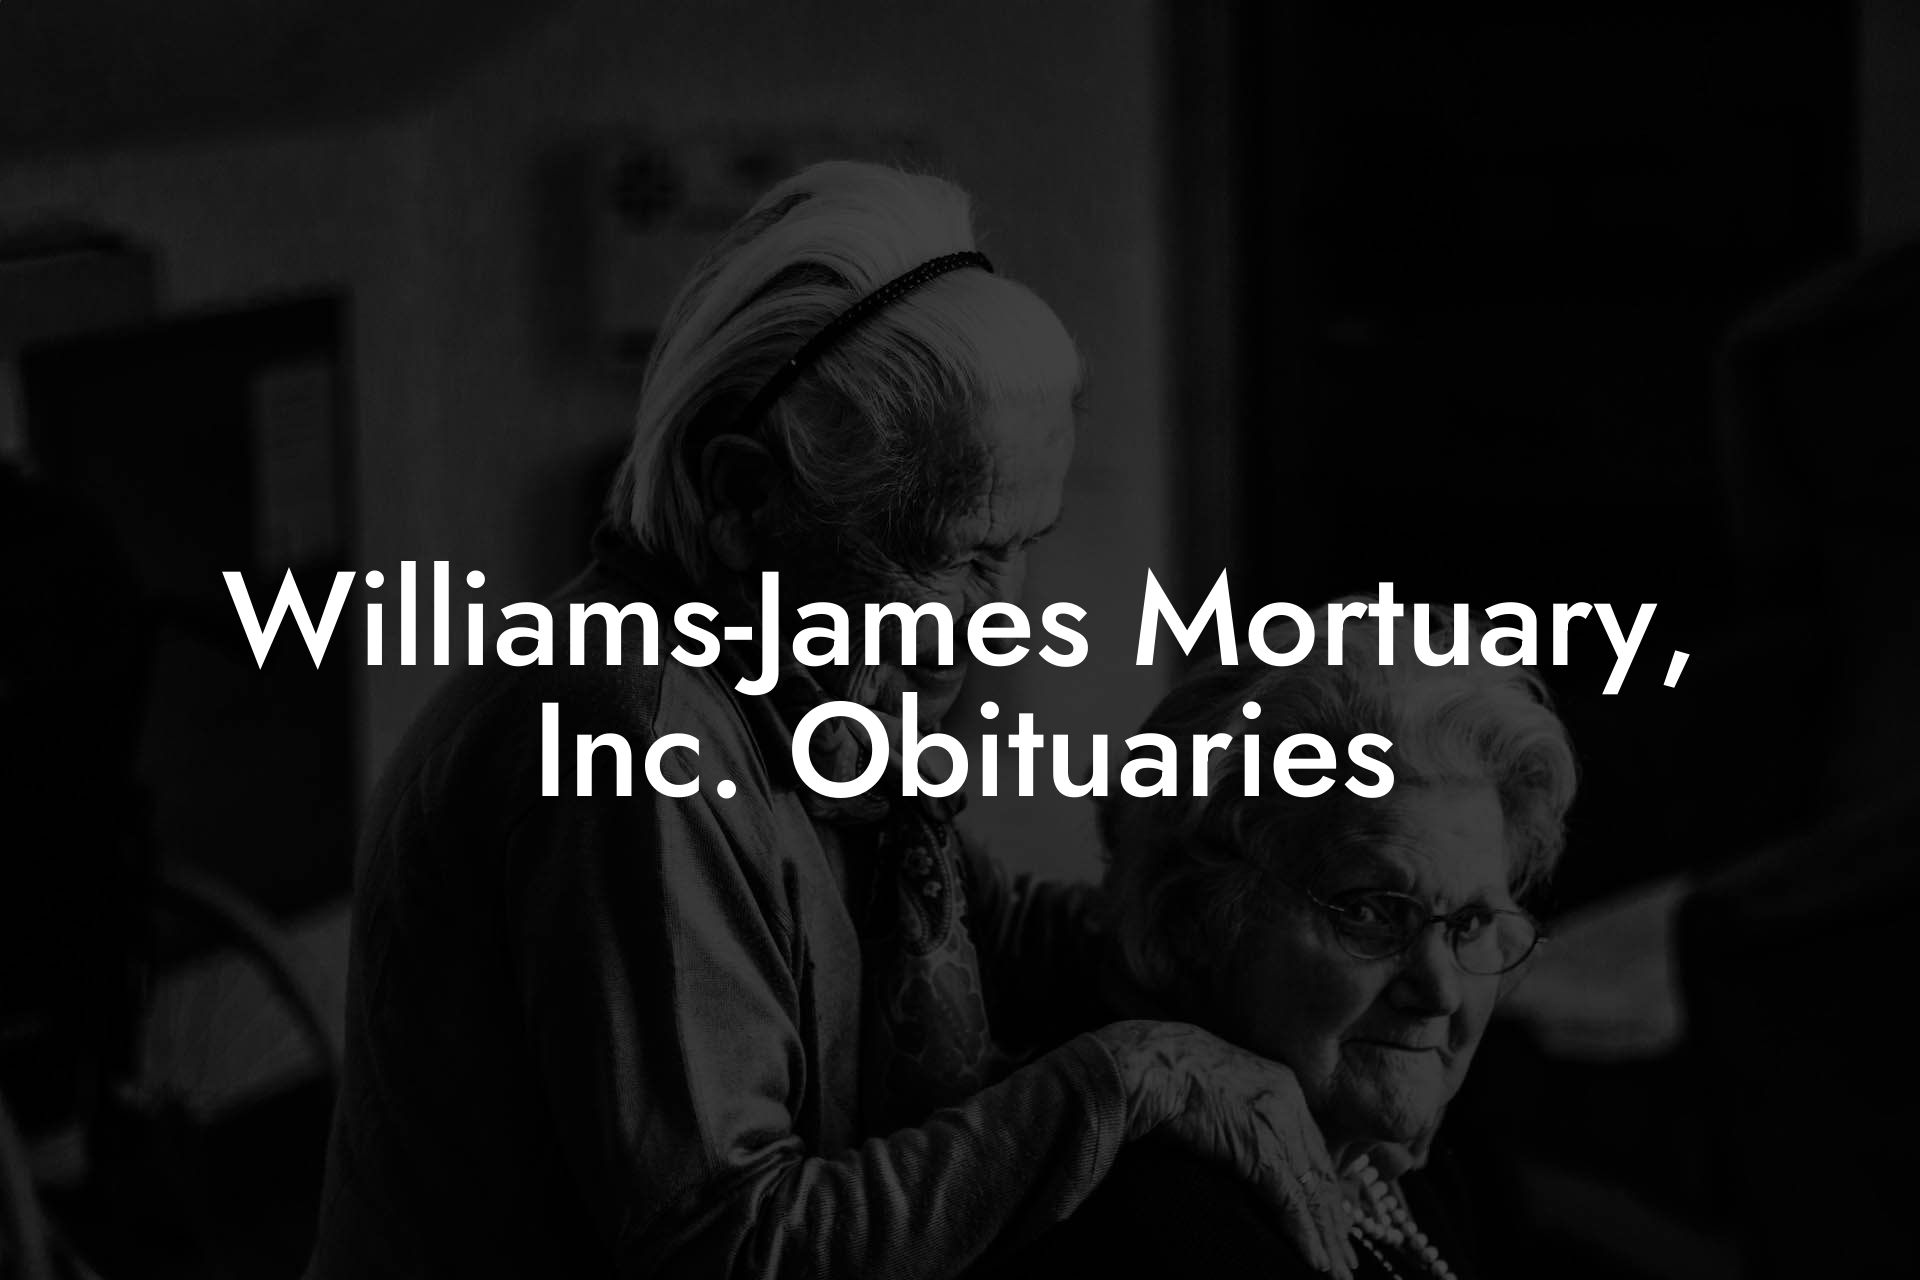 Williams-James Mortuary, Inc. Obituaries